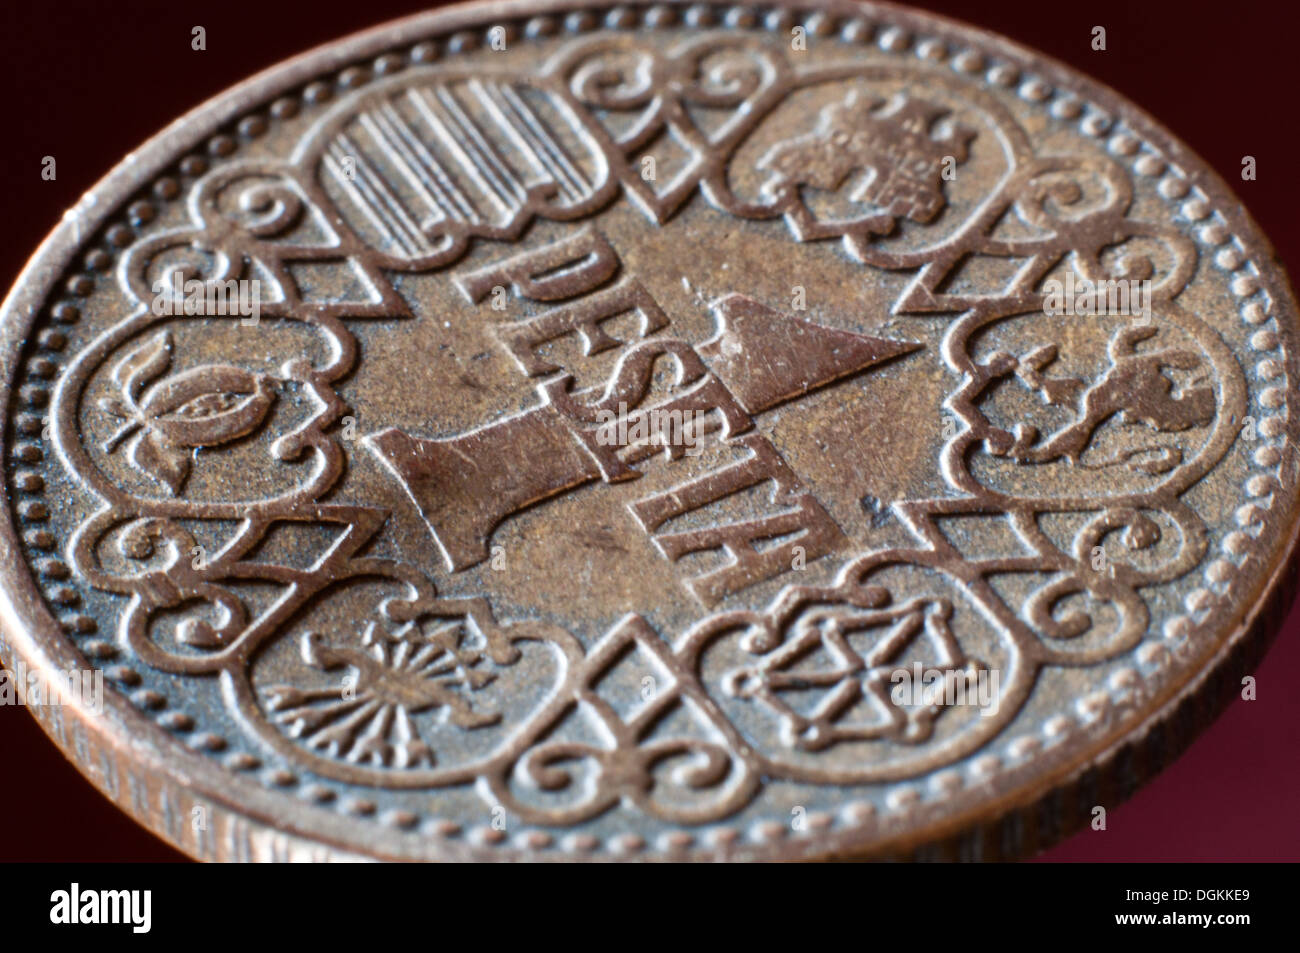 1944 Spain 1 peseta coin Stock Photo